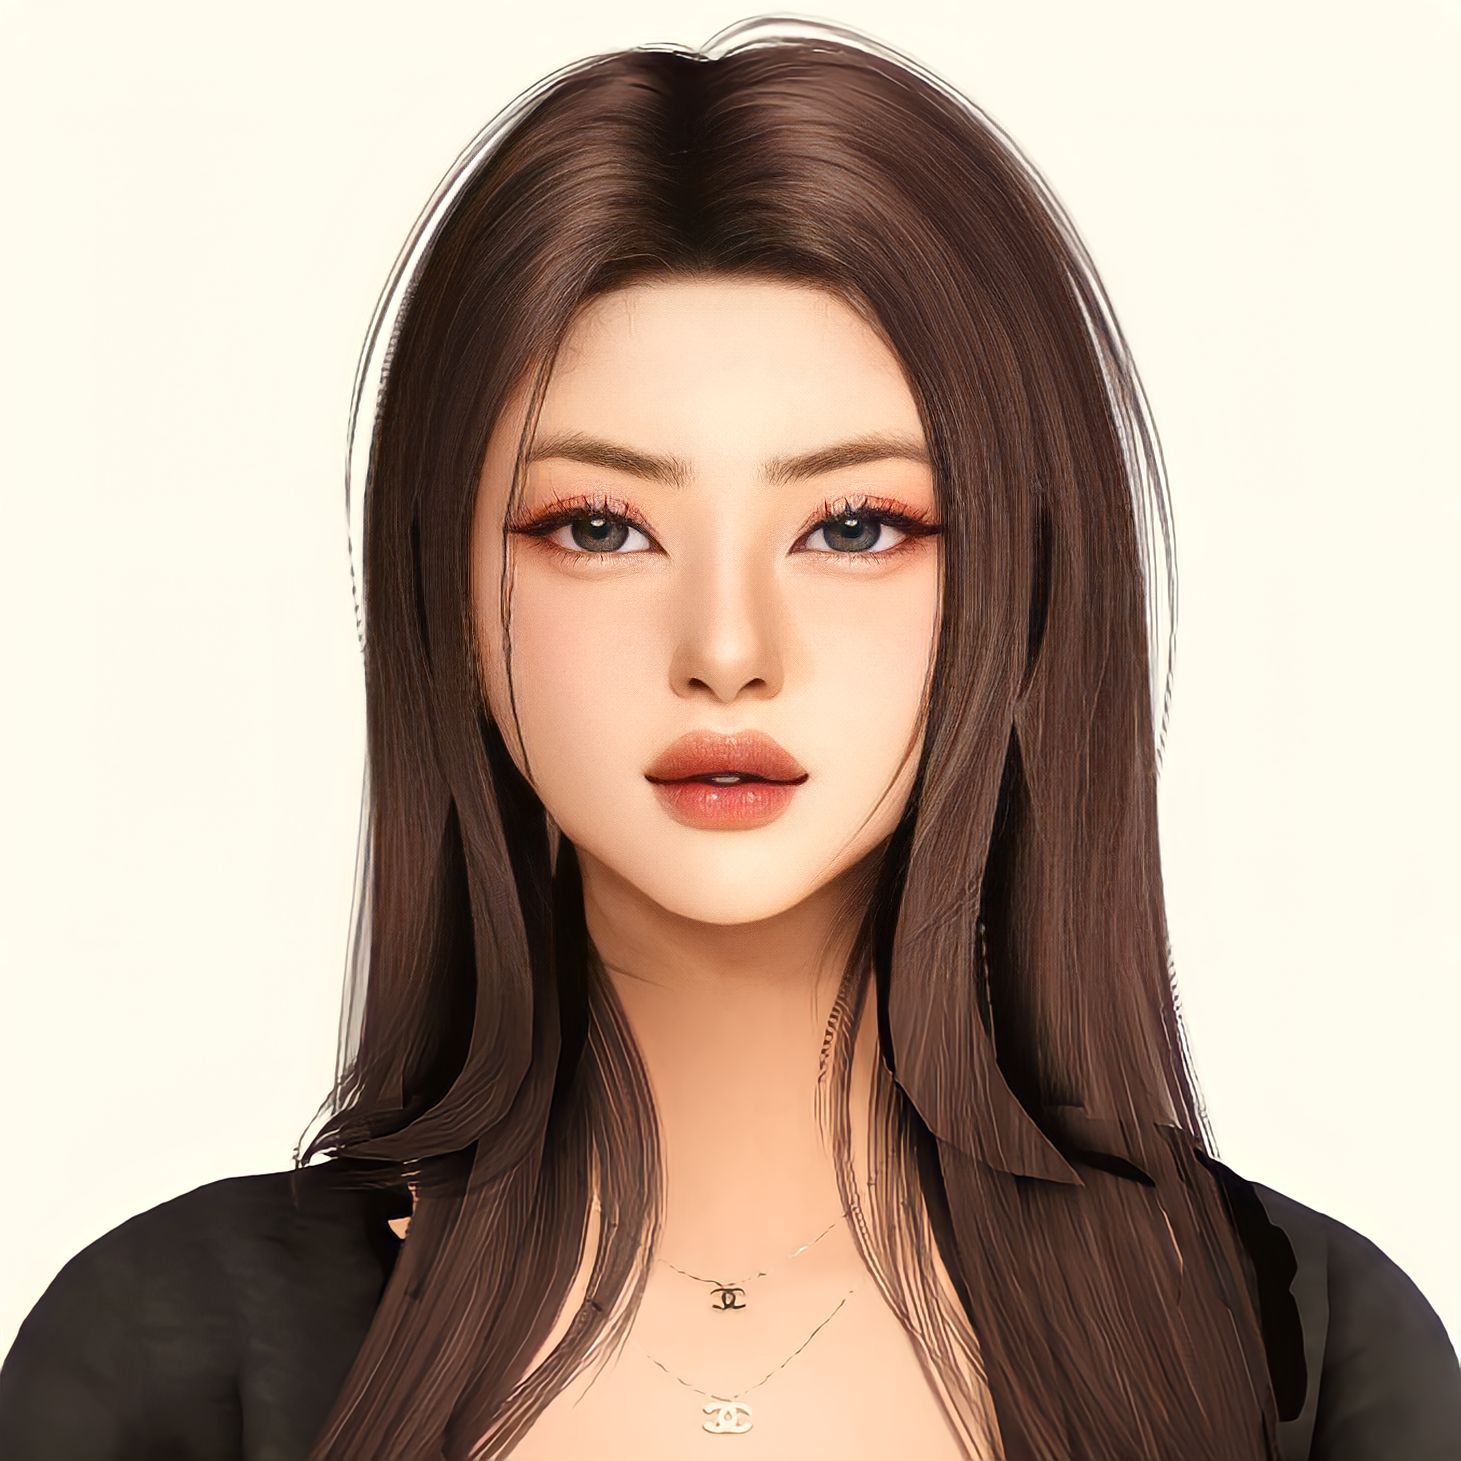 Bria Lovett - The Sims 4 Sims / Households - CurseForge